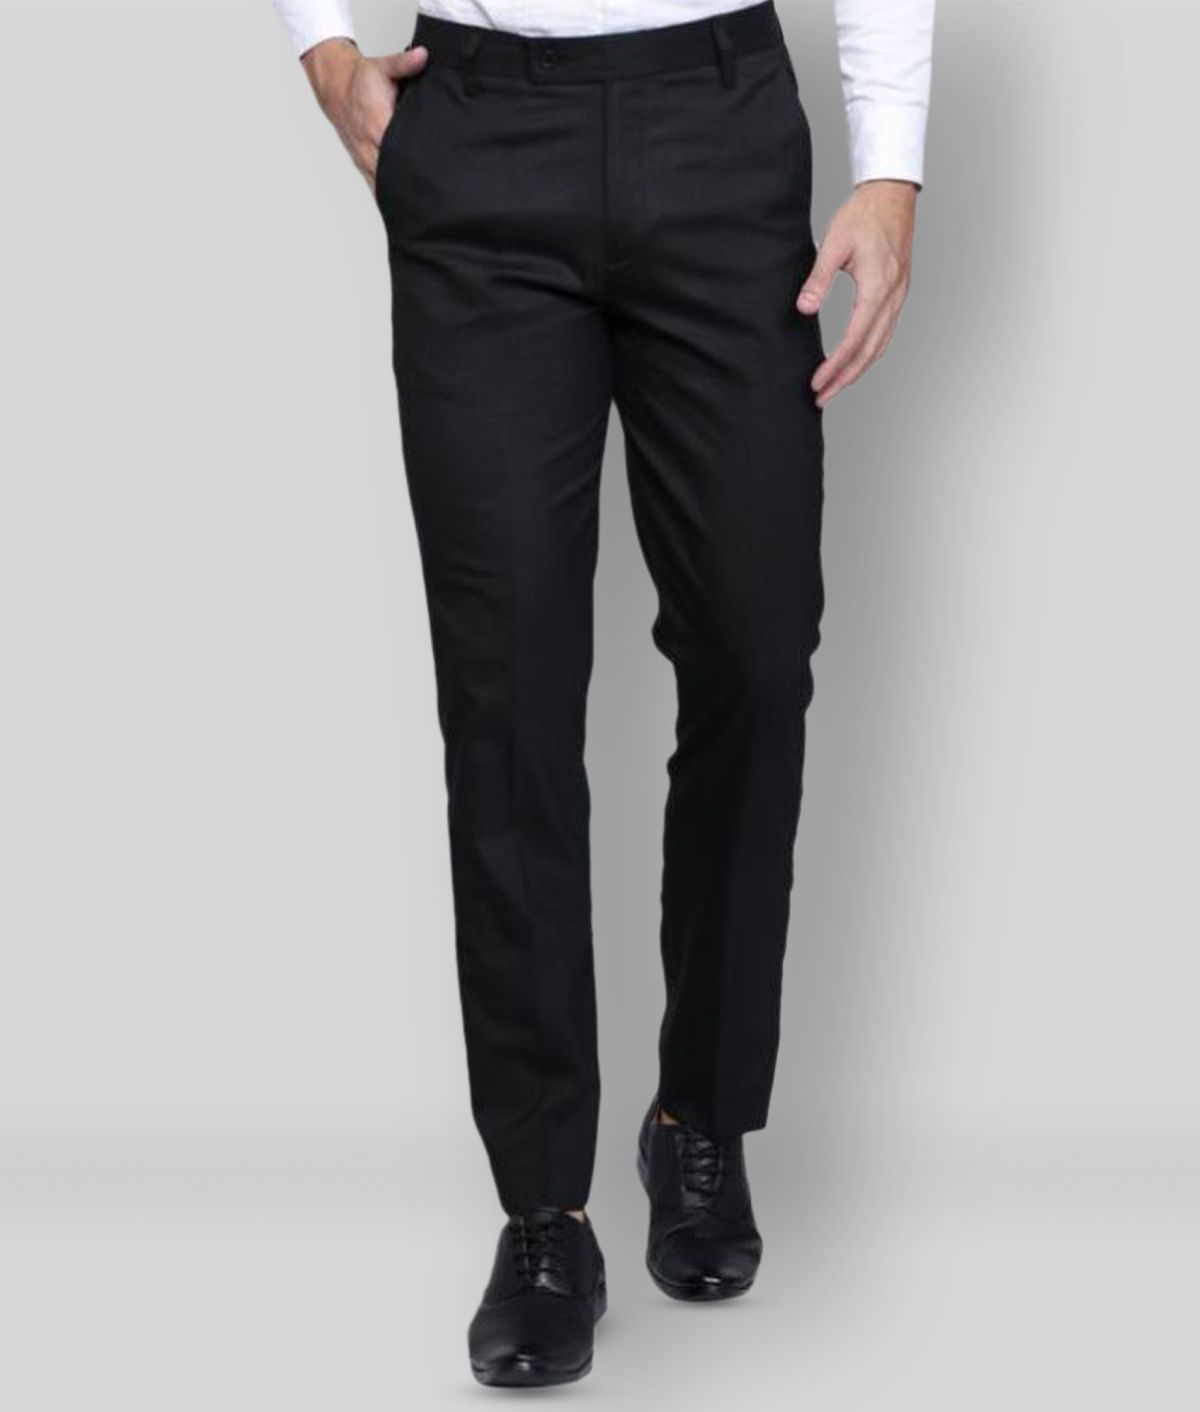     			Haul Chic - Black Cotton Blend Slim Fit Men's Formal Pants (Pack of 1)